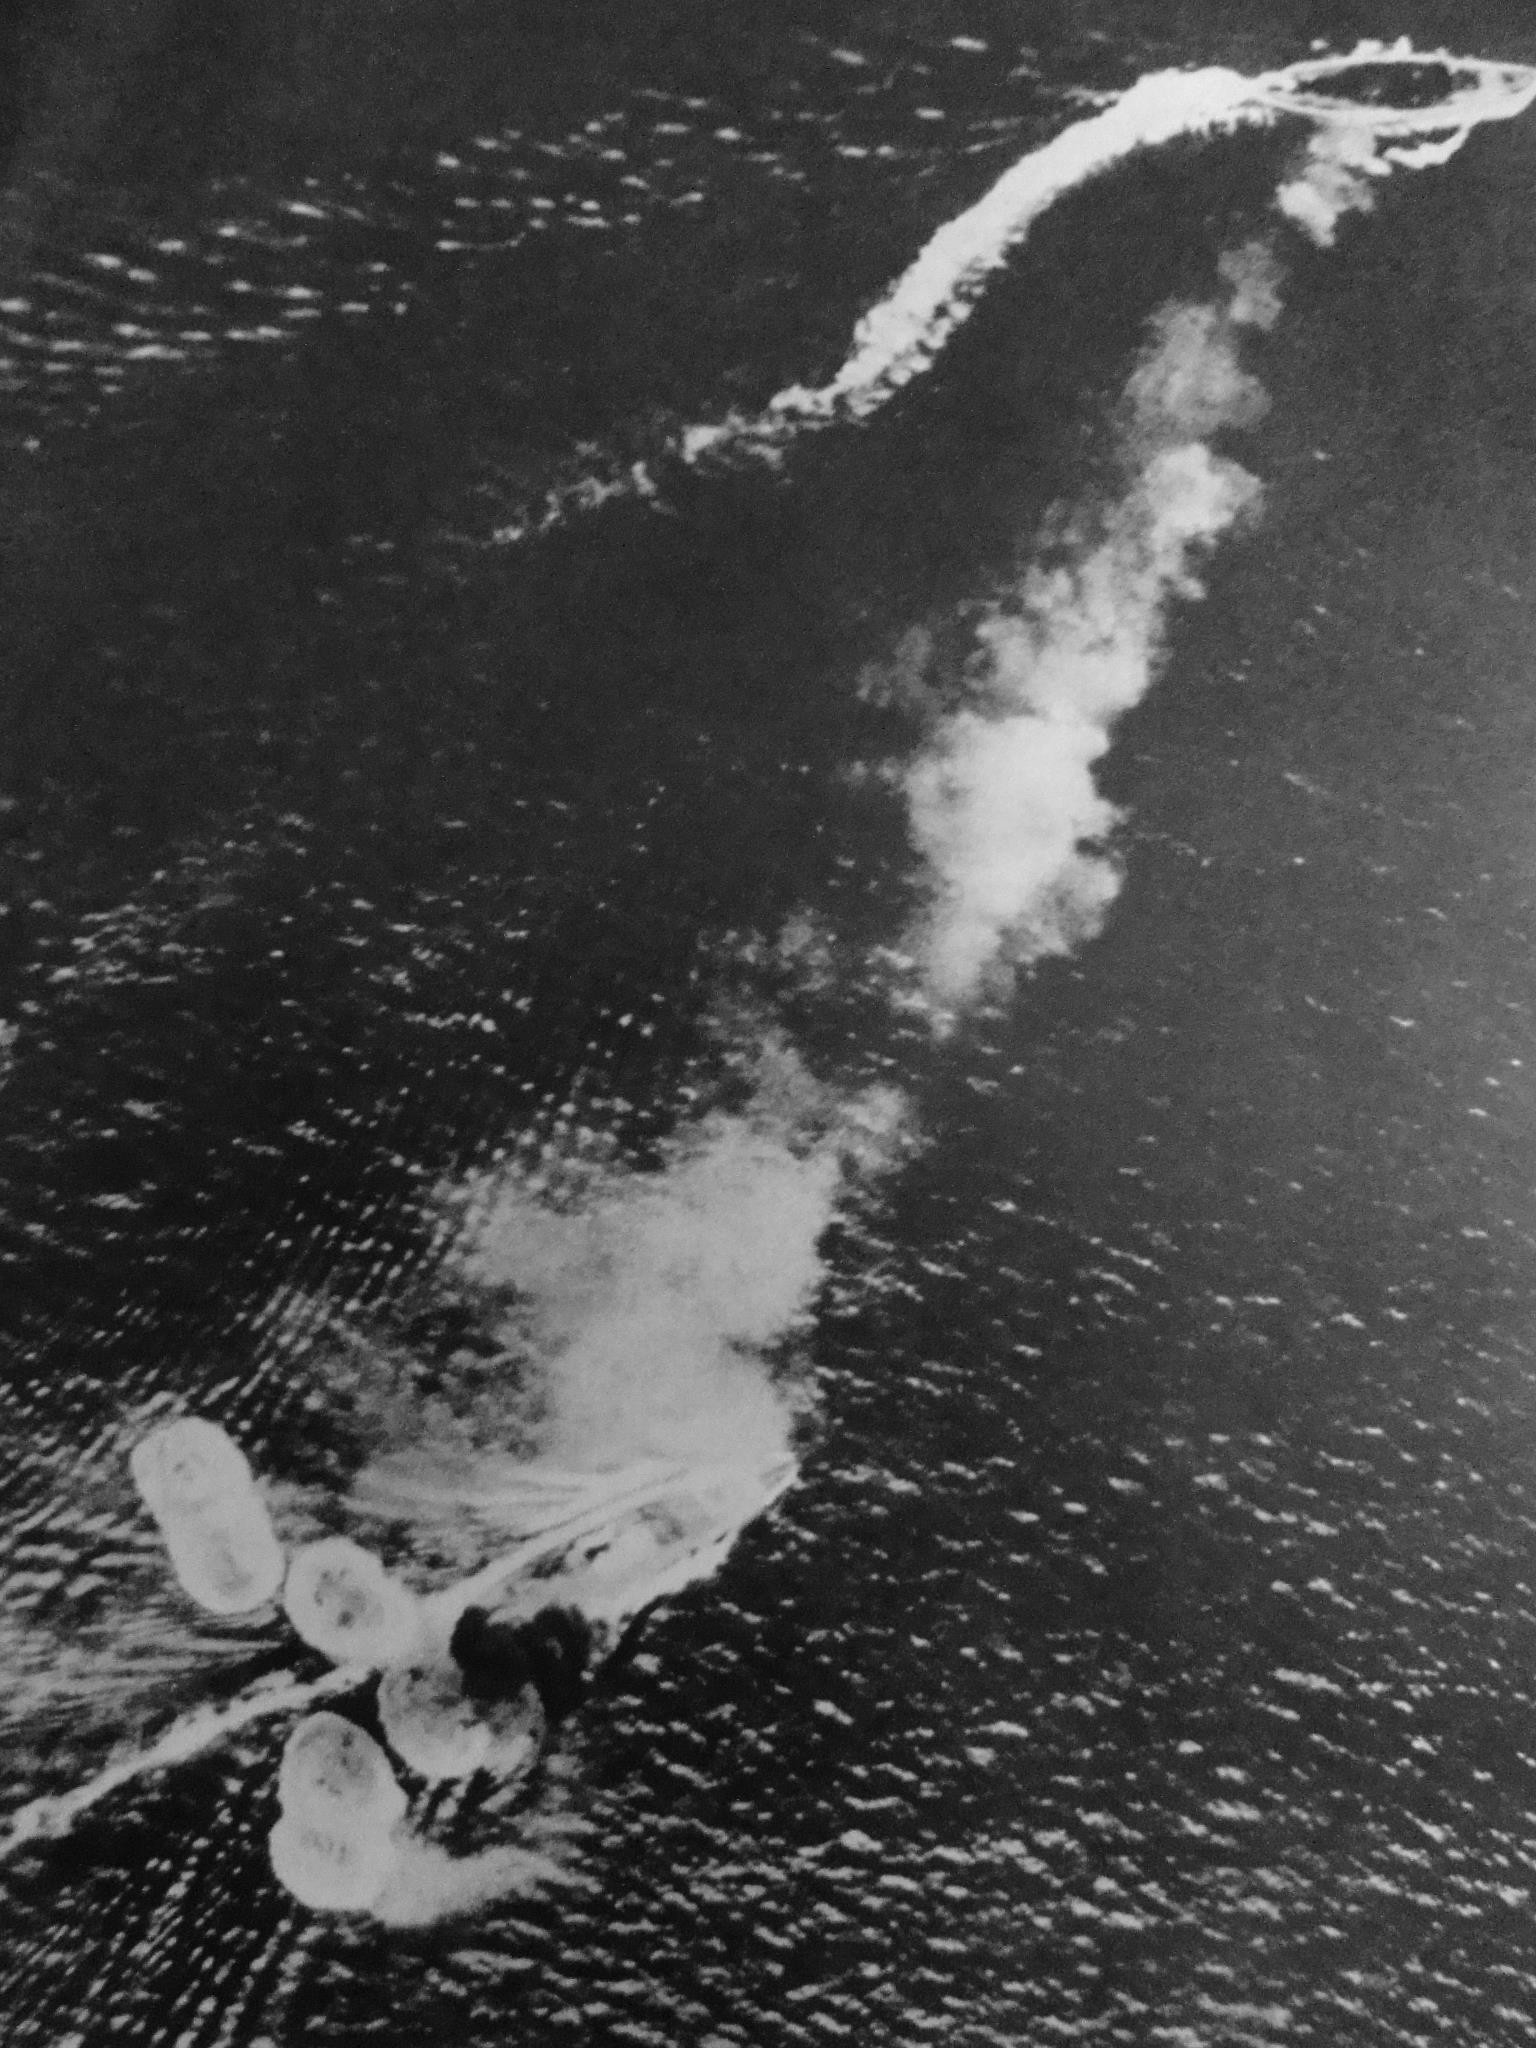 HMS Prince of Wales under attack off Kuantan, Malaya, 10 Dec 1941